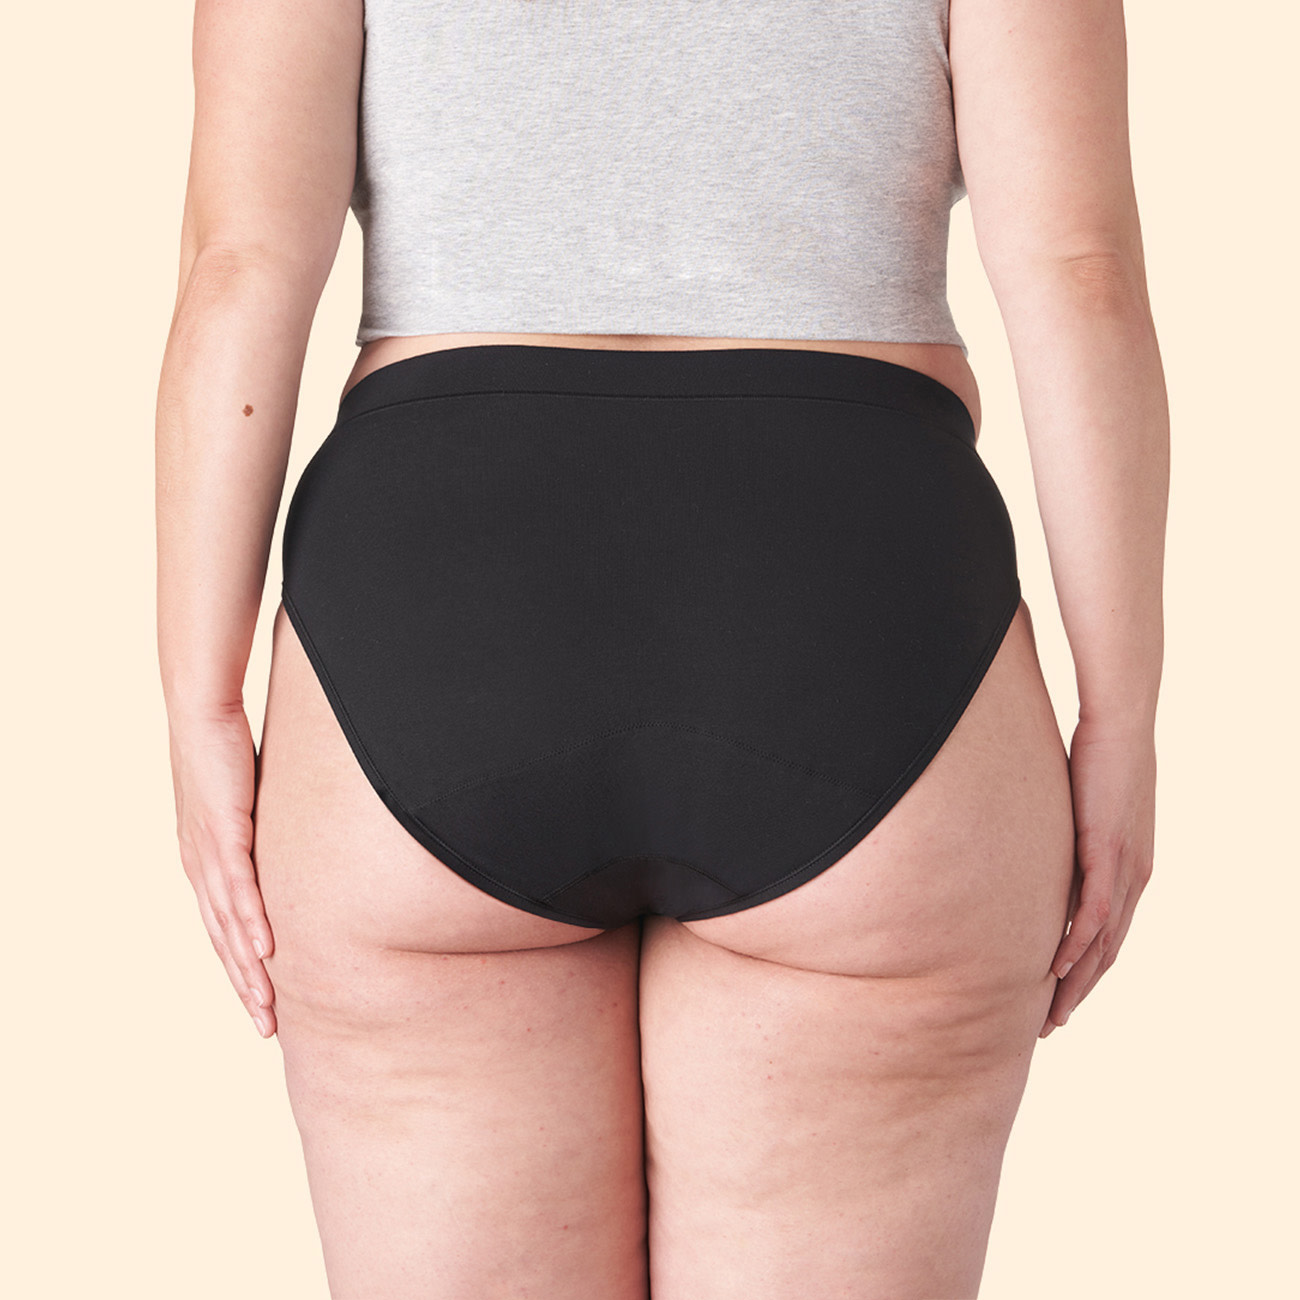 Thinx for All Women's Super Absorbency Bikini Period Underwear